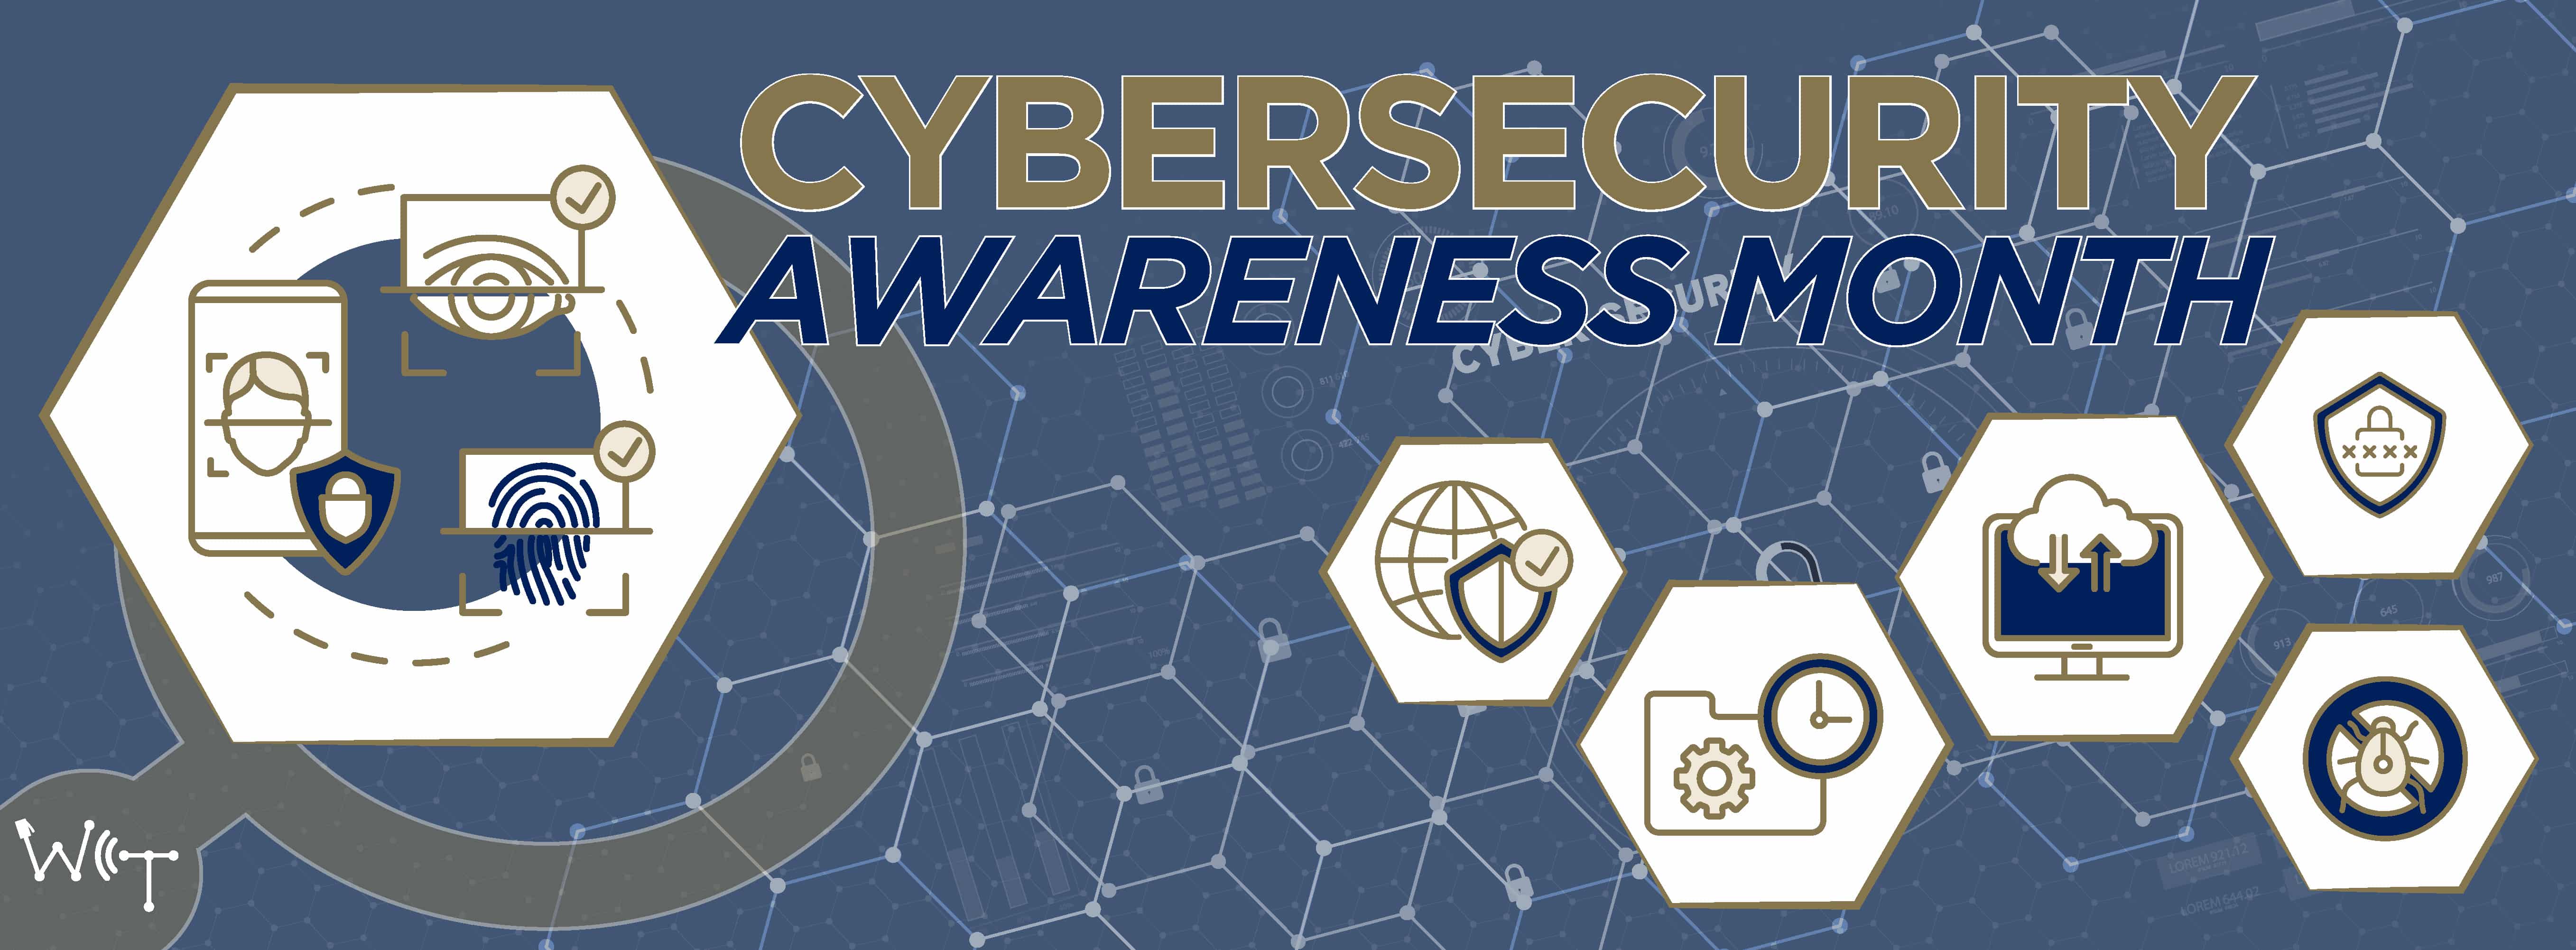 Cybersecurity Awareness Month October Blog Header